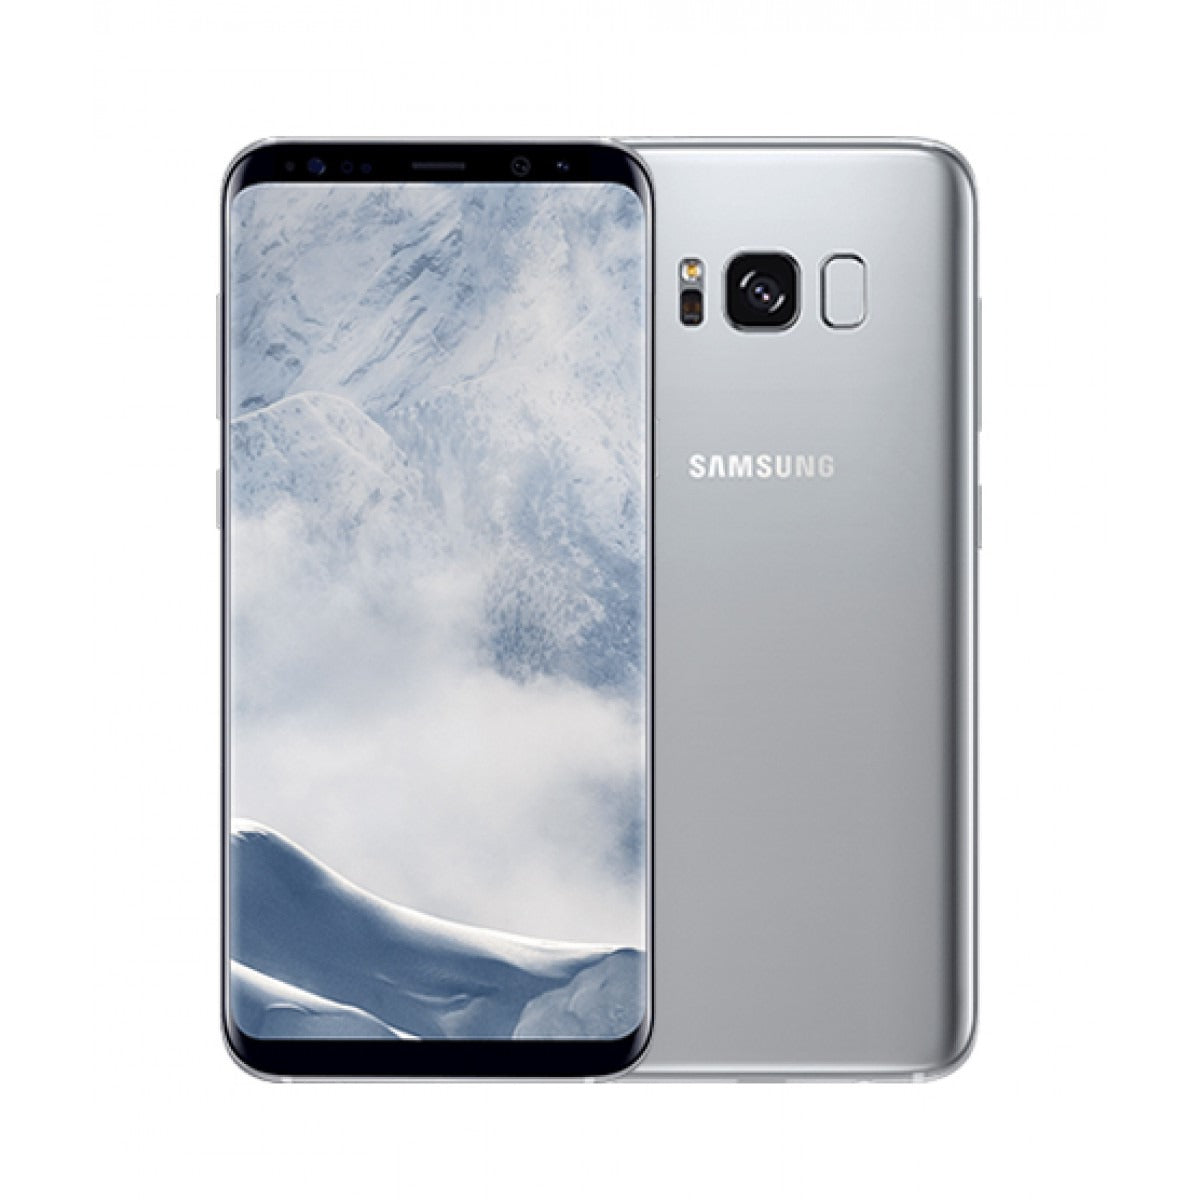 Samsung Galaxy S8 - 64 GB - Arctic Silver - US Cellular - CDMA/G